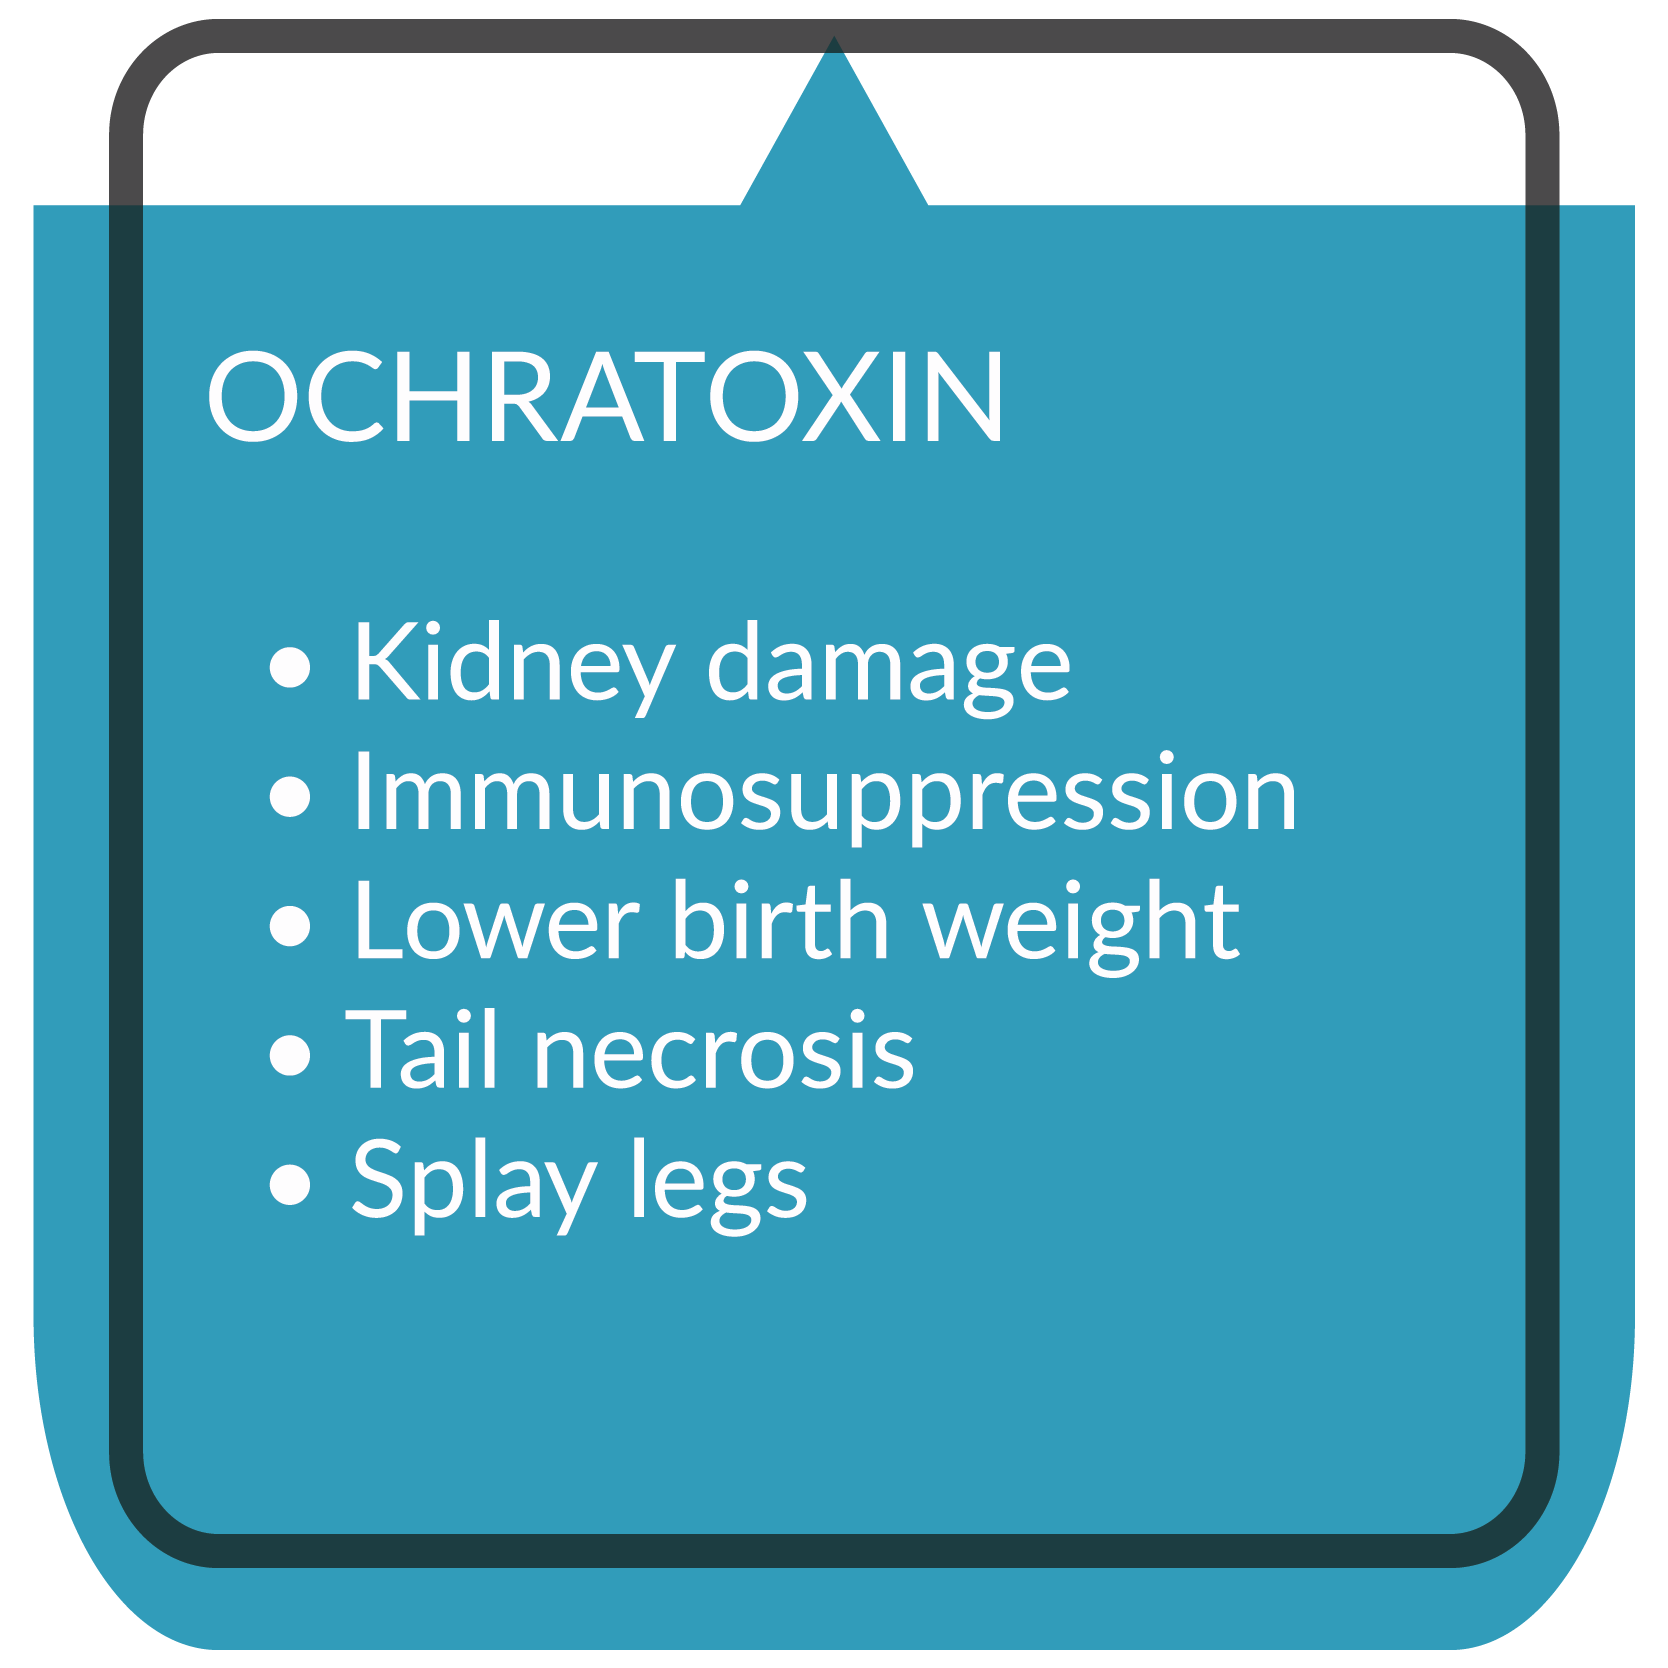 kaa Toxfin Swine infographic Ochratoxin